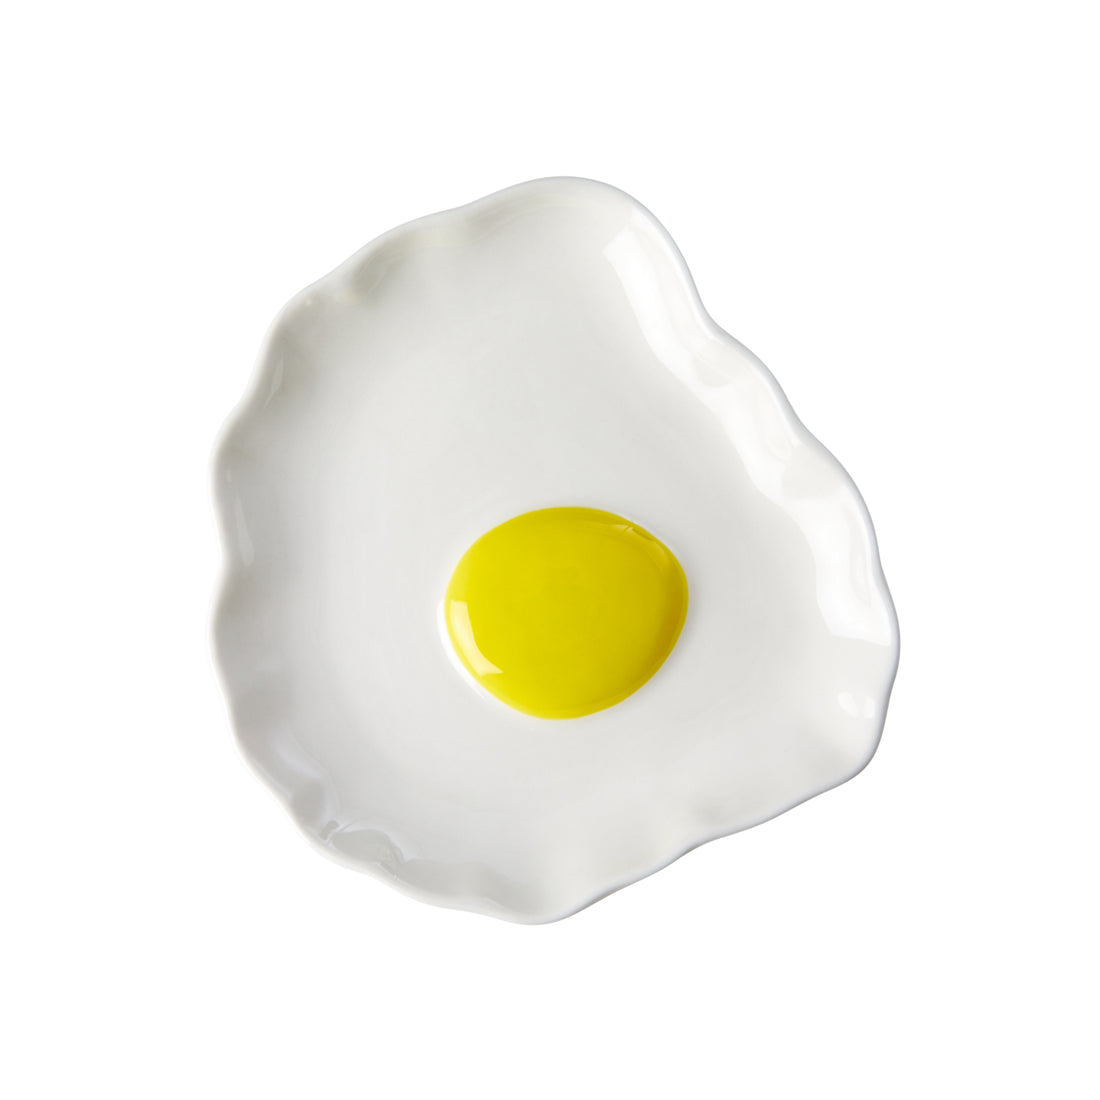 rice-dk-ceramic-dish-in-fried-egg-shape-rice-cedis-egg-